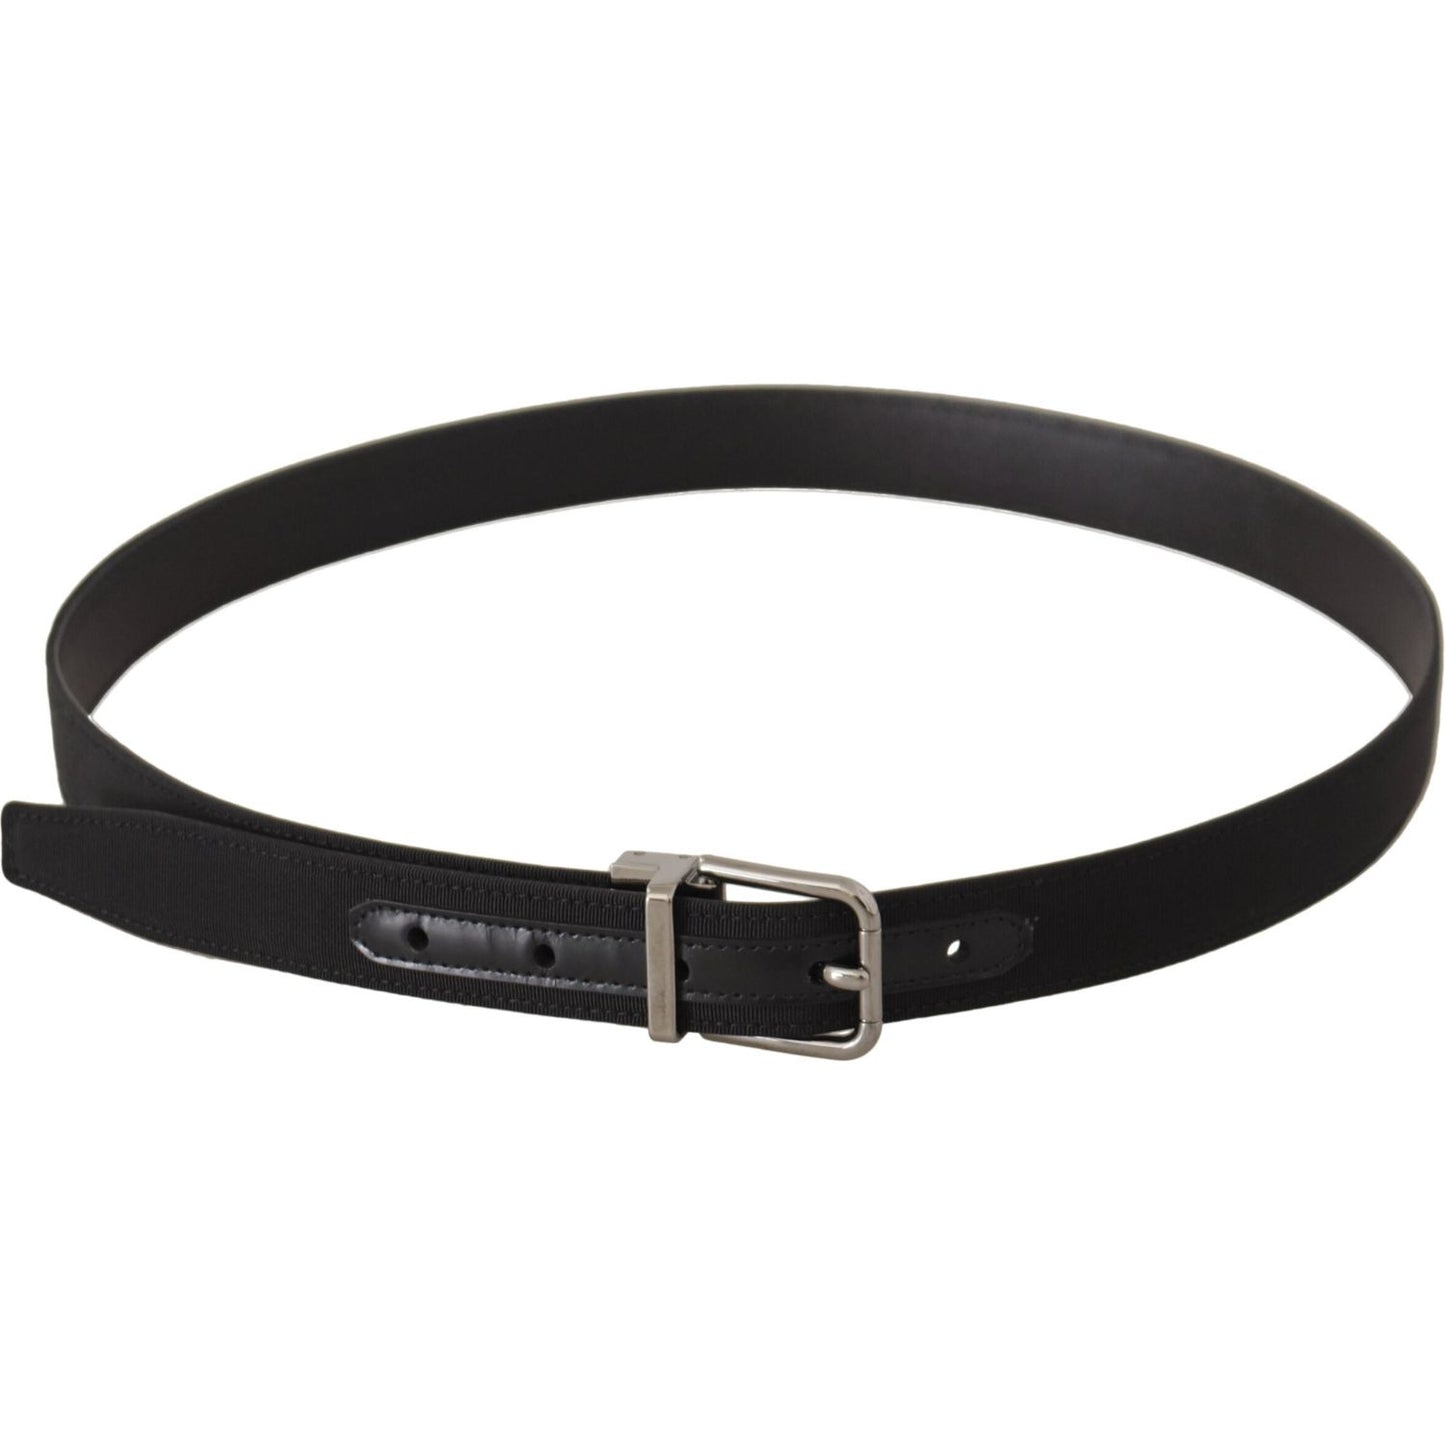 Dolce & Gabbana Elegant Black Leather Belt with Metal Buckle black-canvas-leather-silver-metal-buckle-belt IMG_0494-scaled-46596534-5ff.jpg